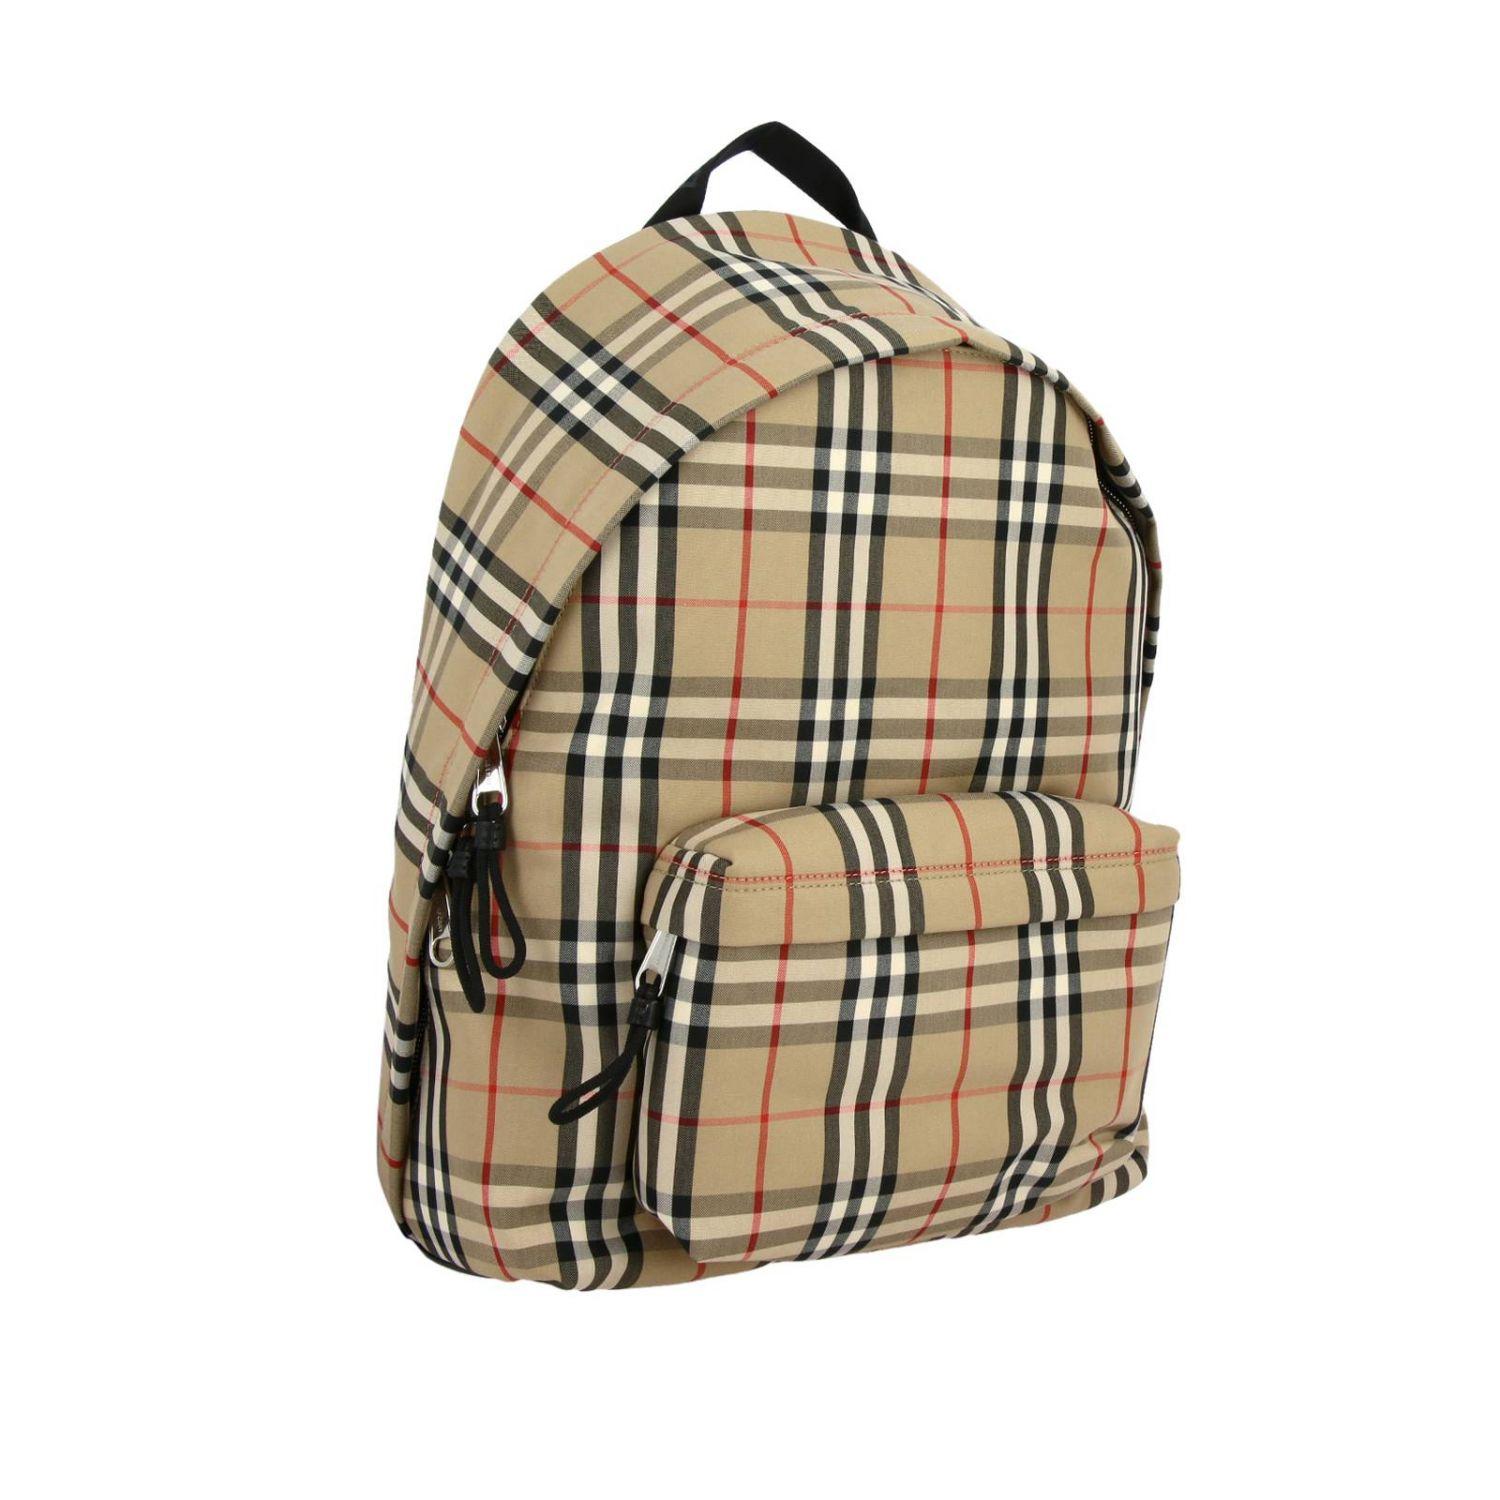 Burberry Cotton Men's Backpack in Beige (Natural) for Men - Lyst